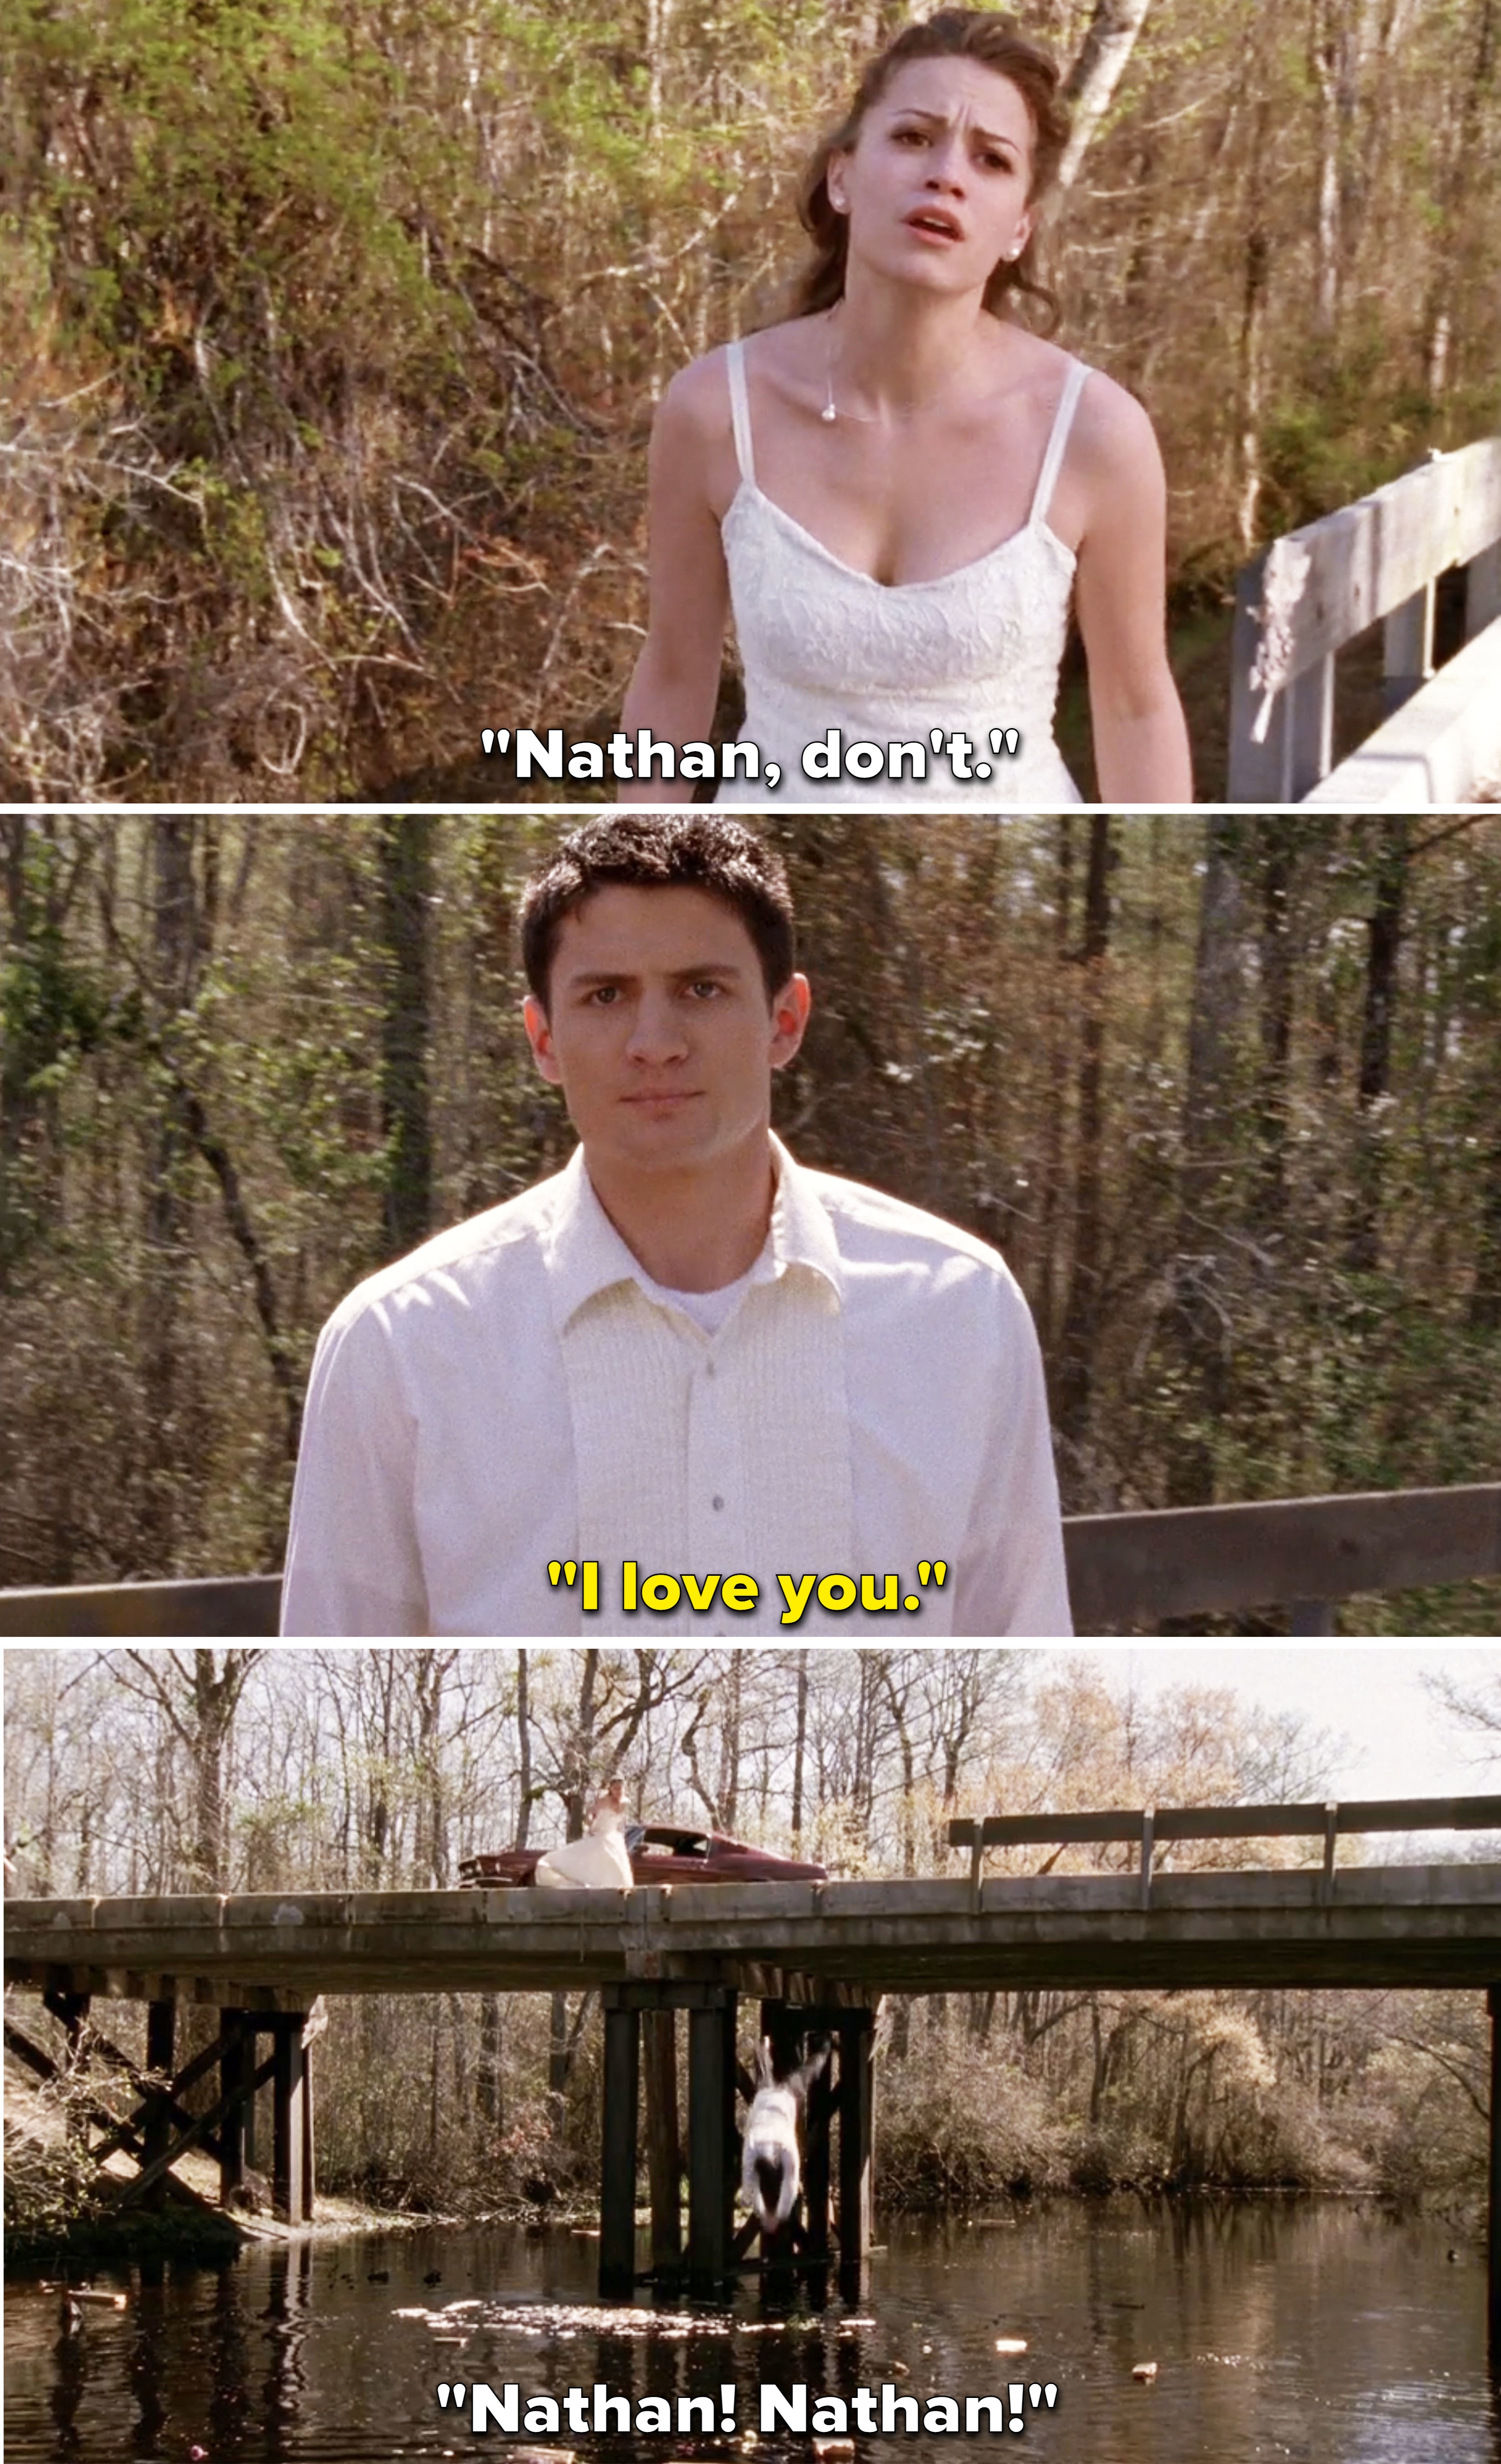 &quot;Nathan! Nathan!&quot;